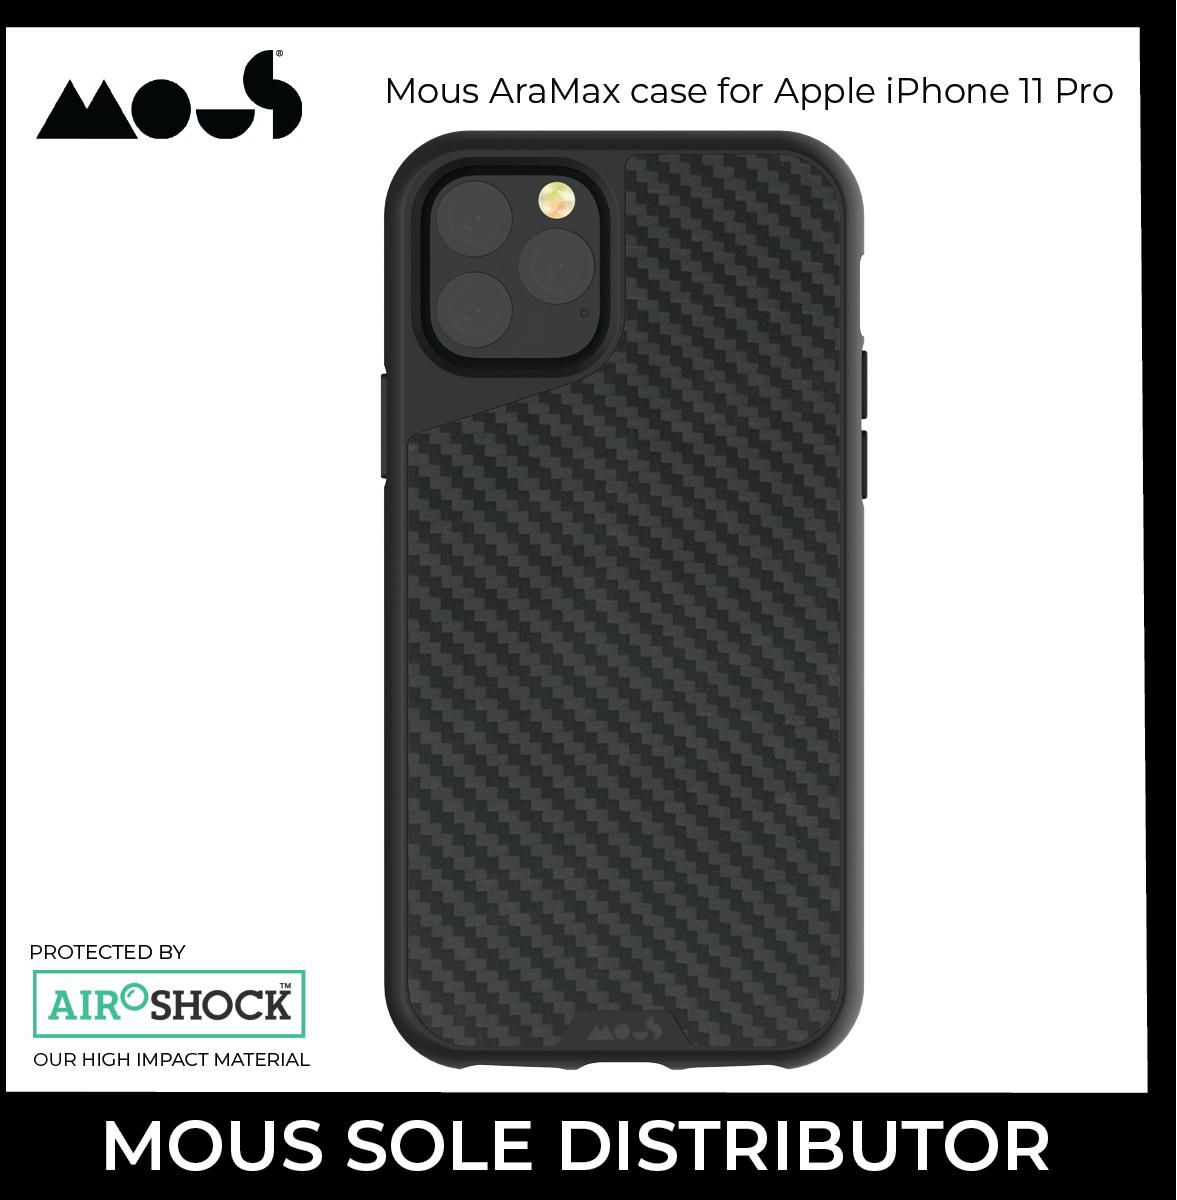 Mous AraMax Case for Apple iPhone 11 Pro (Black)